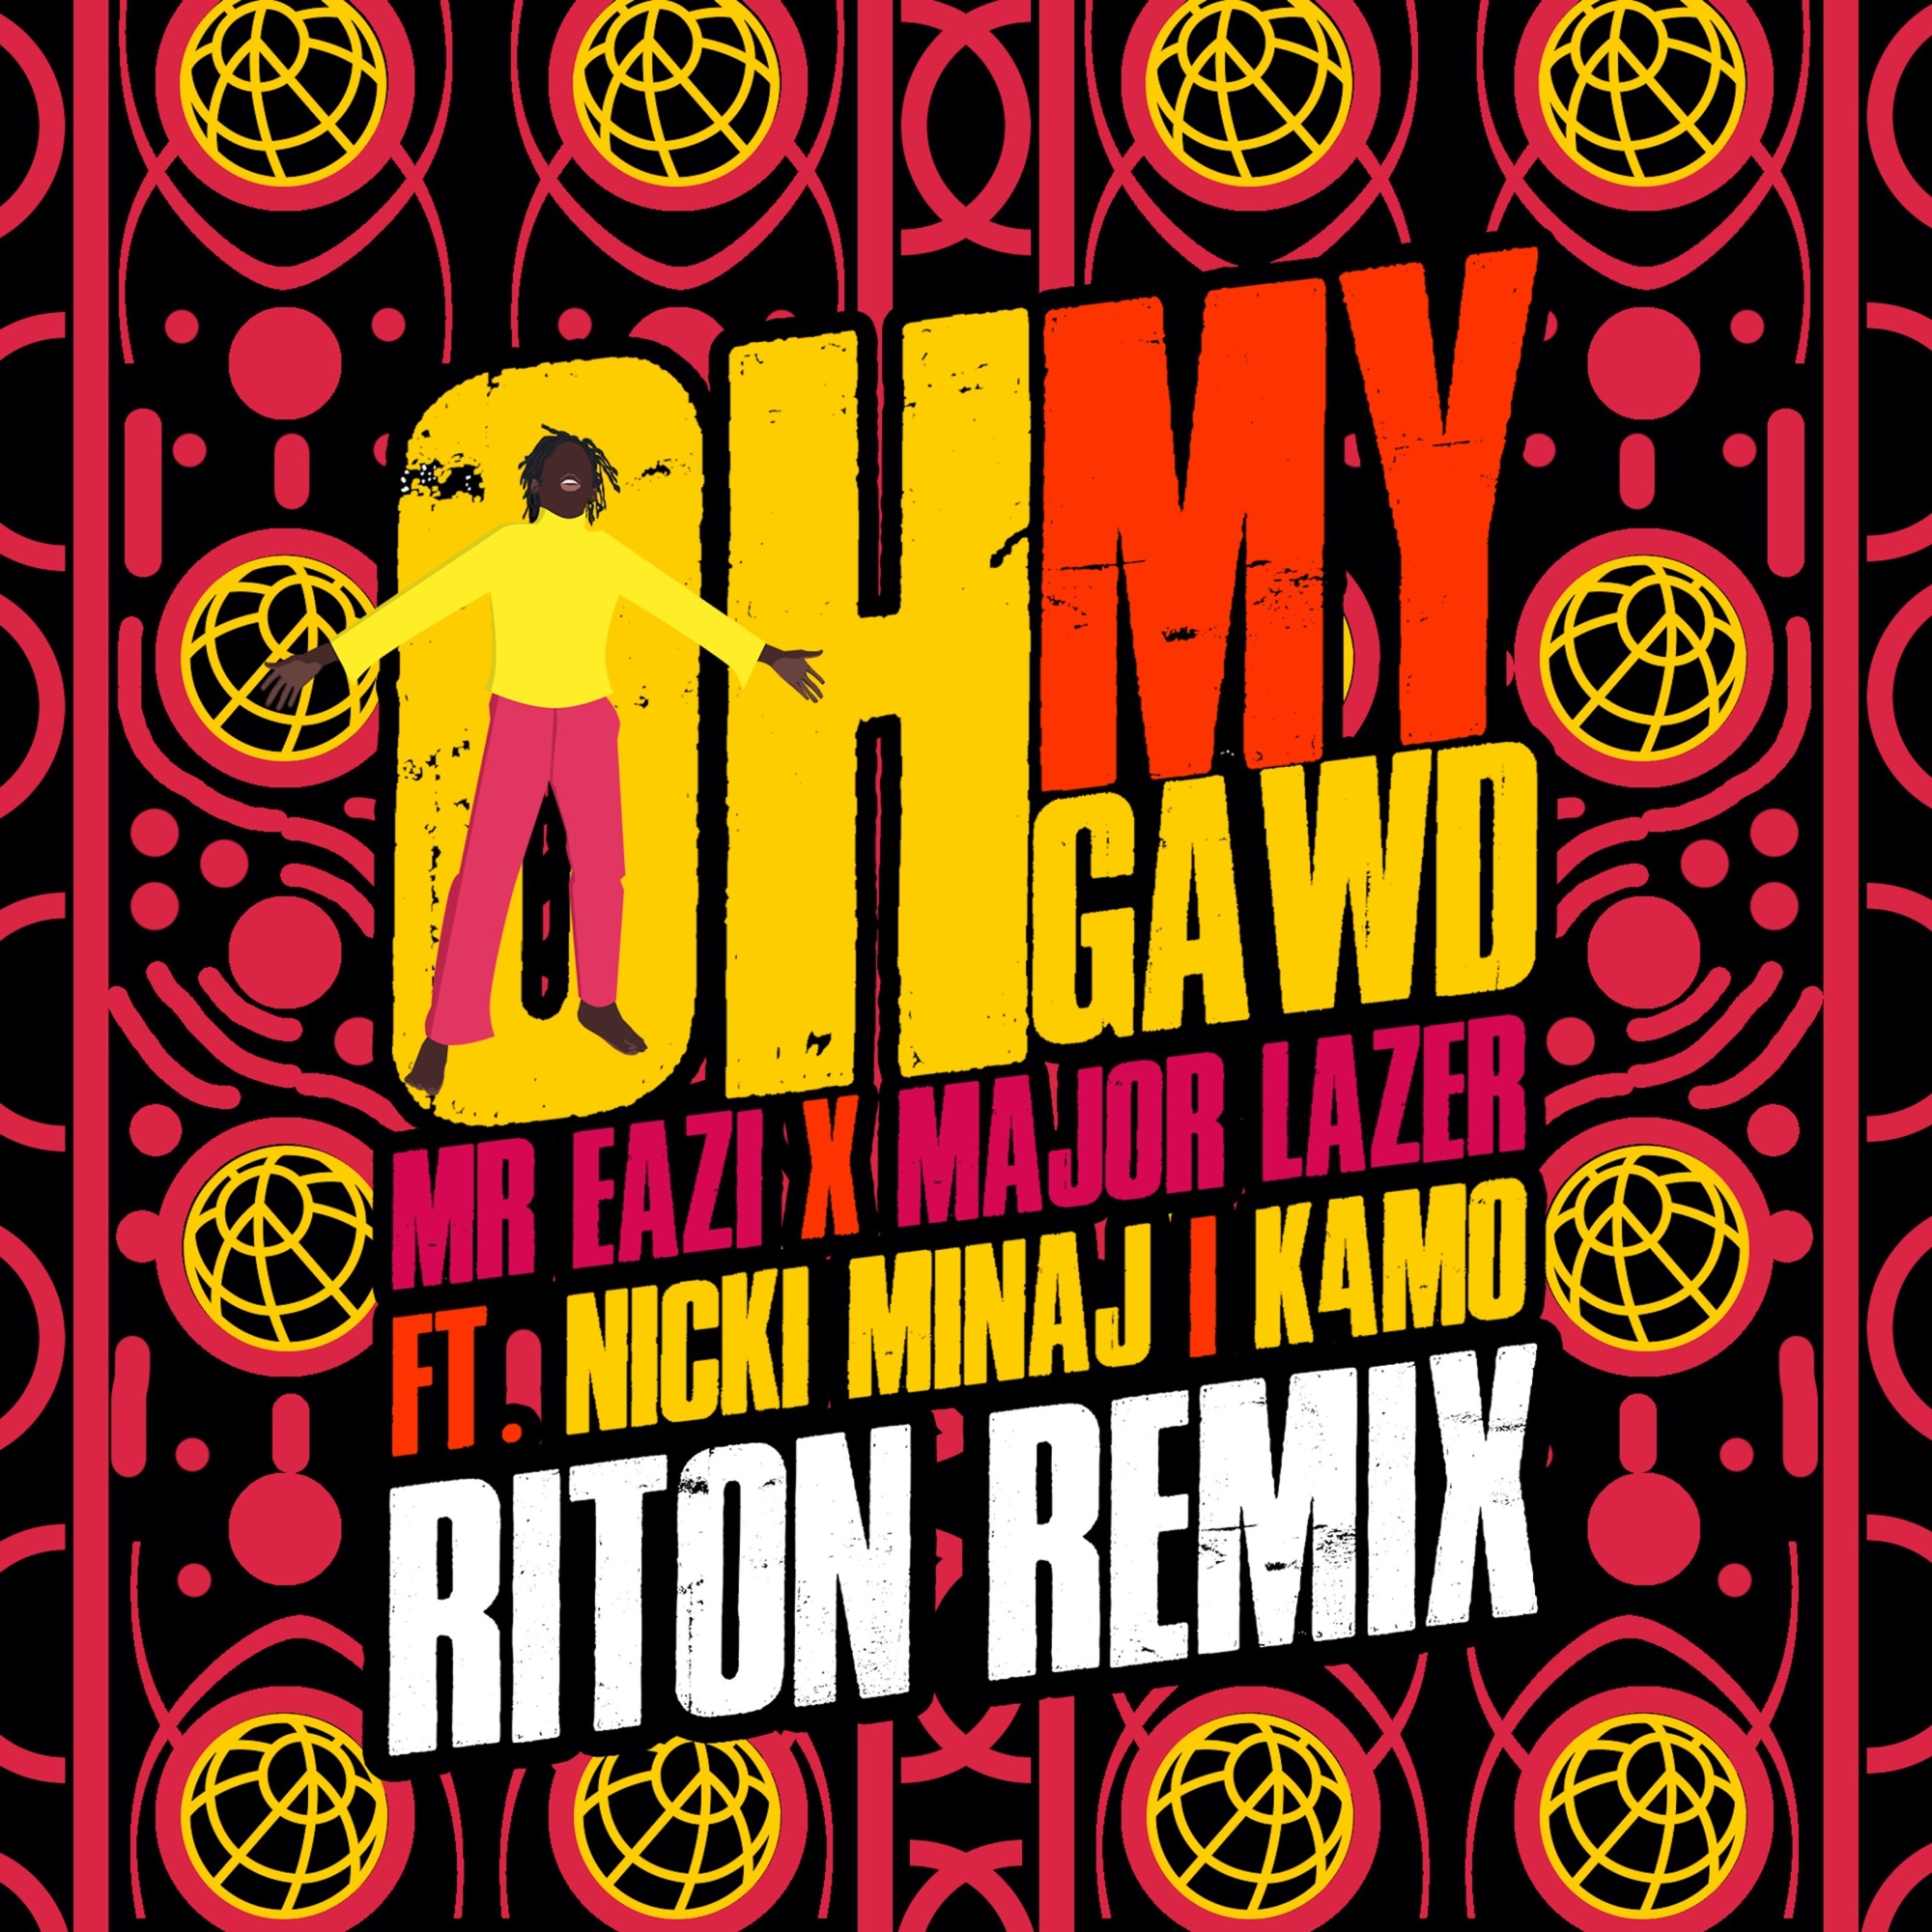 Major Lazer & Mr Eazi - Oh My Gawd (feat. K4mo & Nicki Minaj) [Riton Remix] - Single